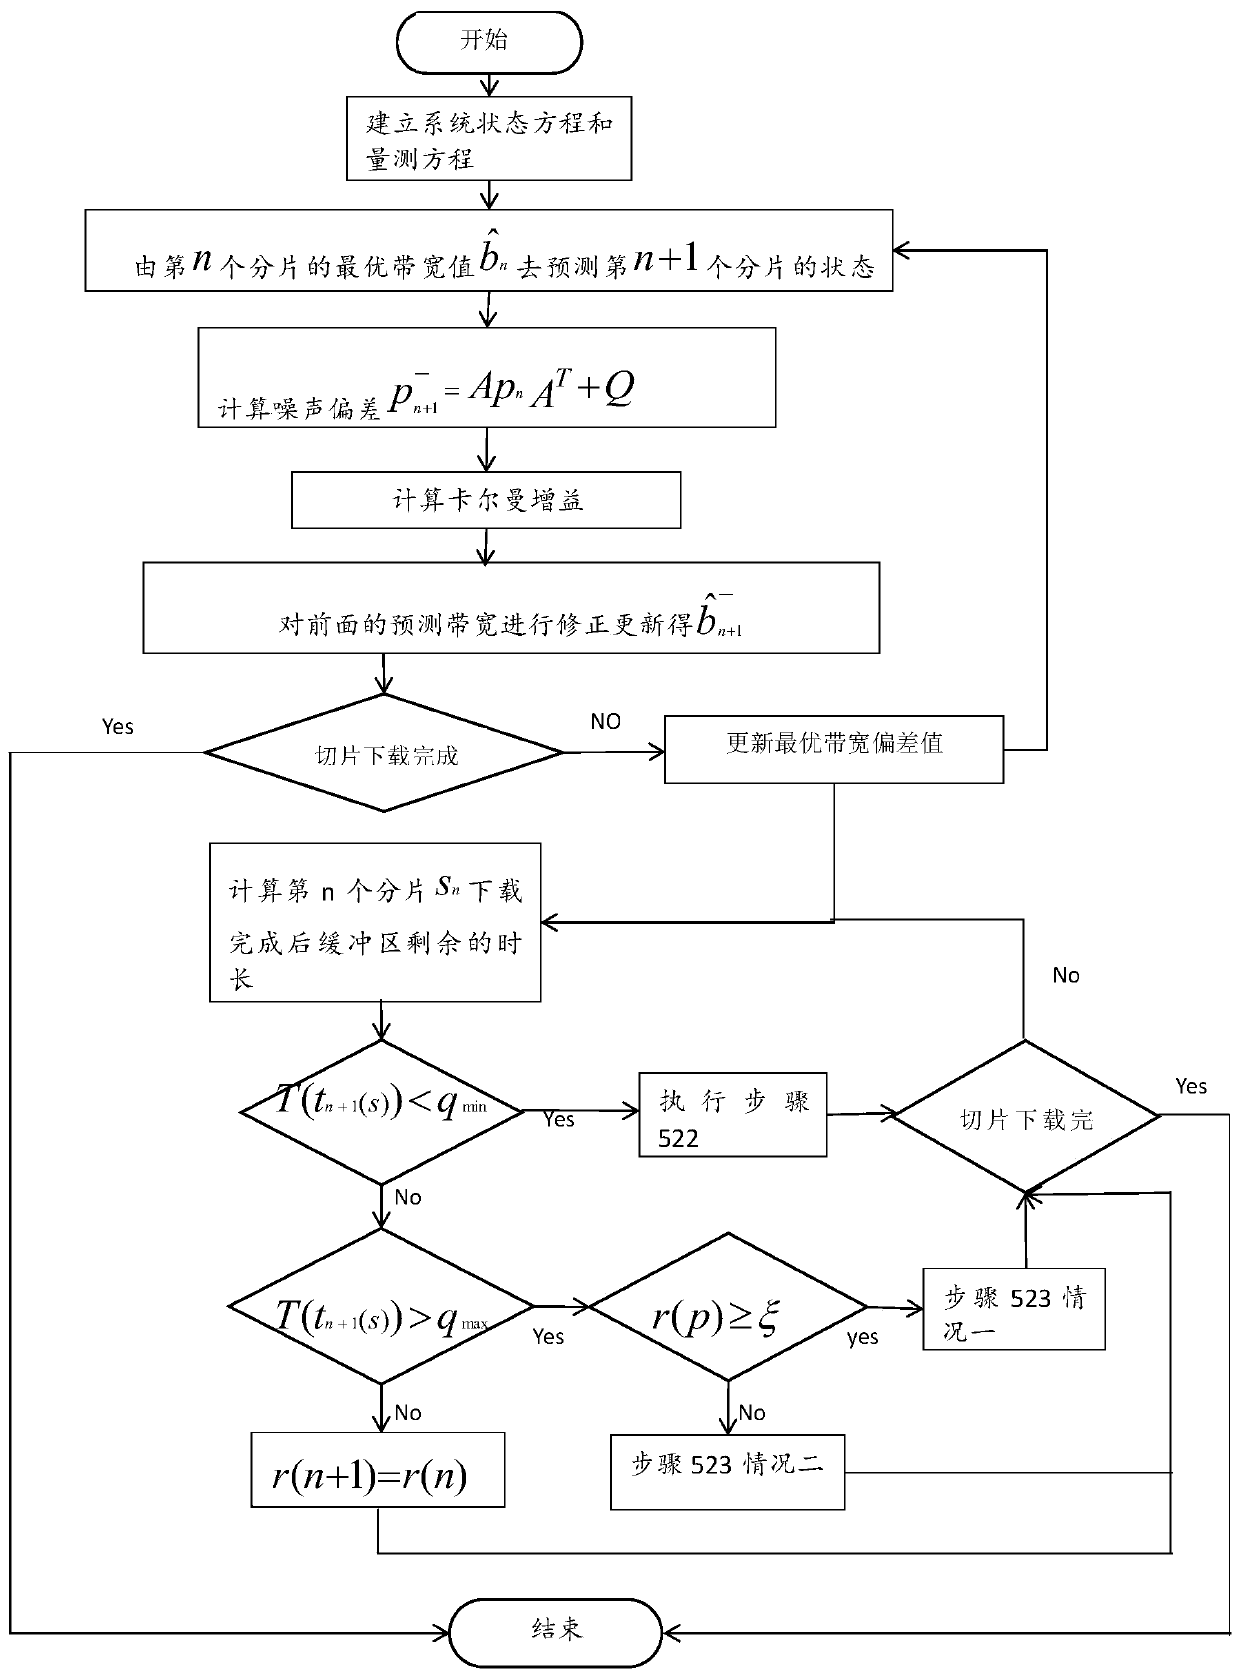 Dynamic adaptive code rate selection method based on mpeg-dash protocol